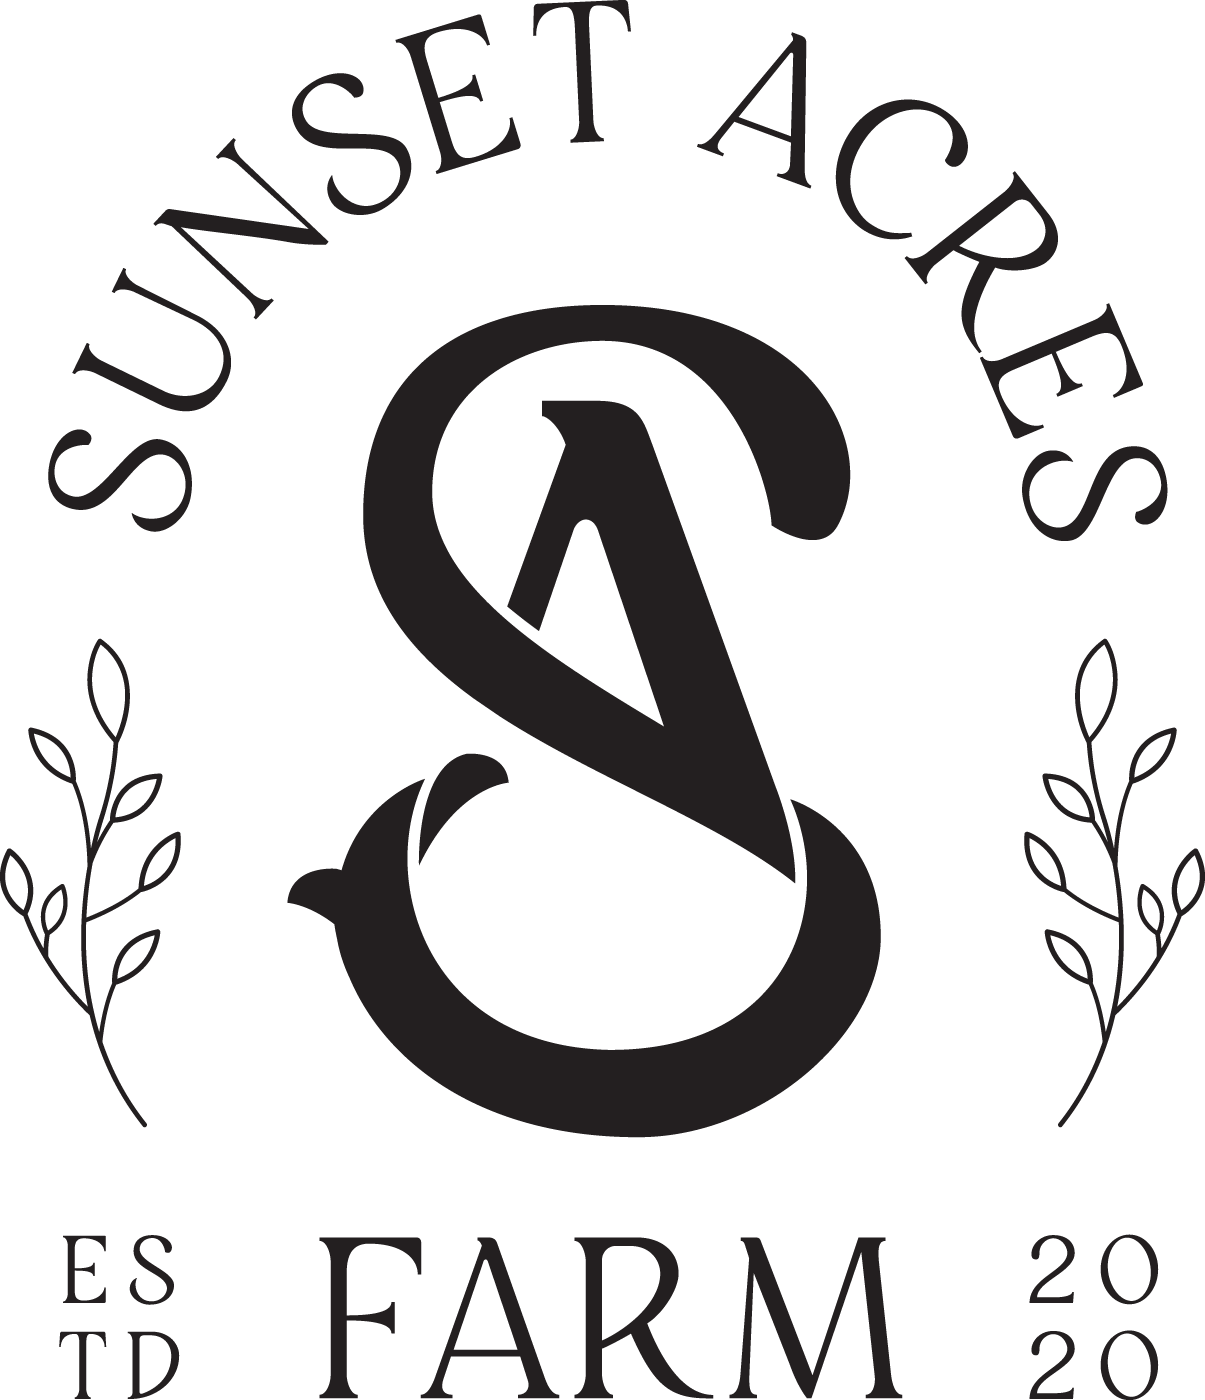 Sunset Acres Farm